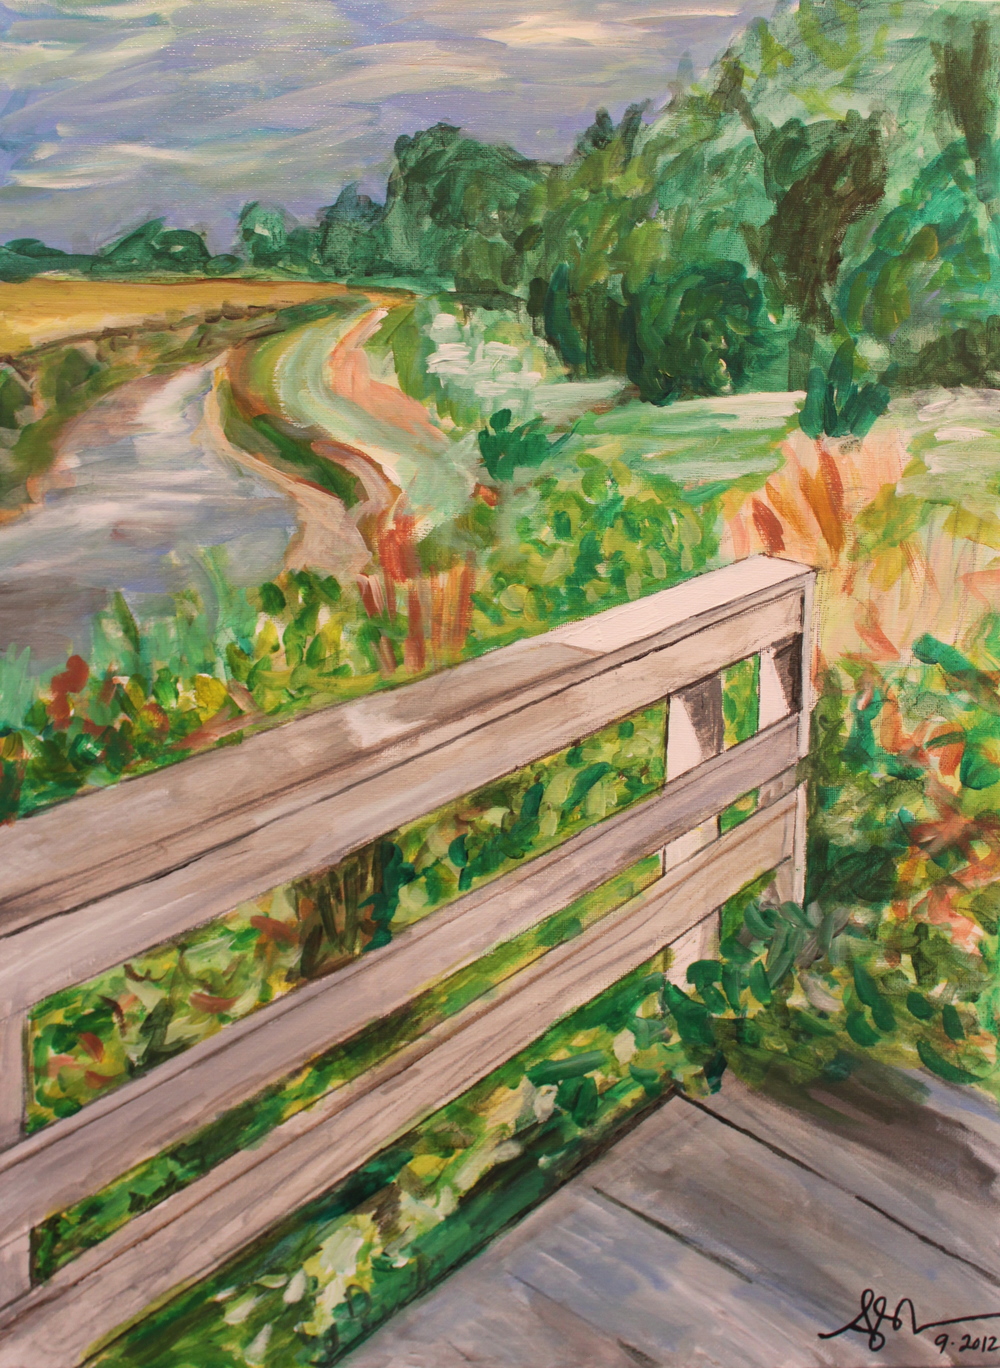    Holliwell Bridge,&nbsp; Angela Matsuoka    Oil and Acrylic on Canvas, 18"x24"  